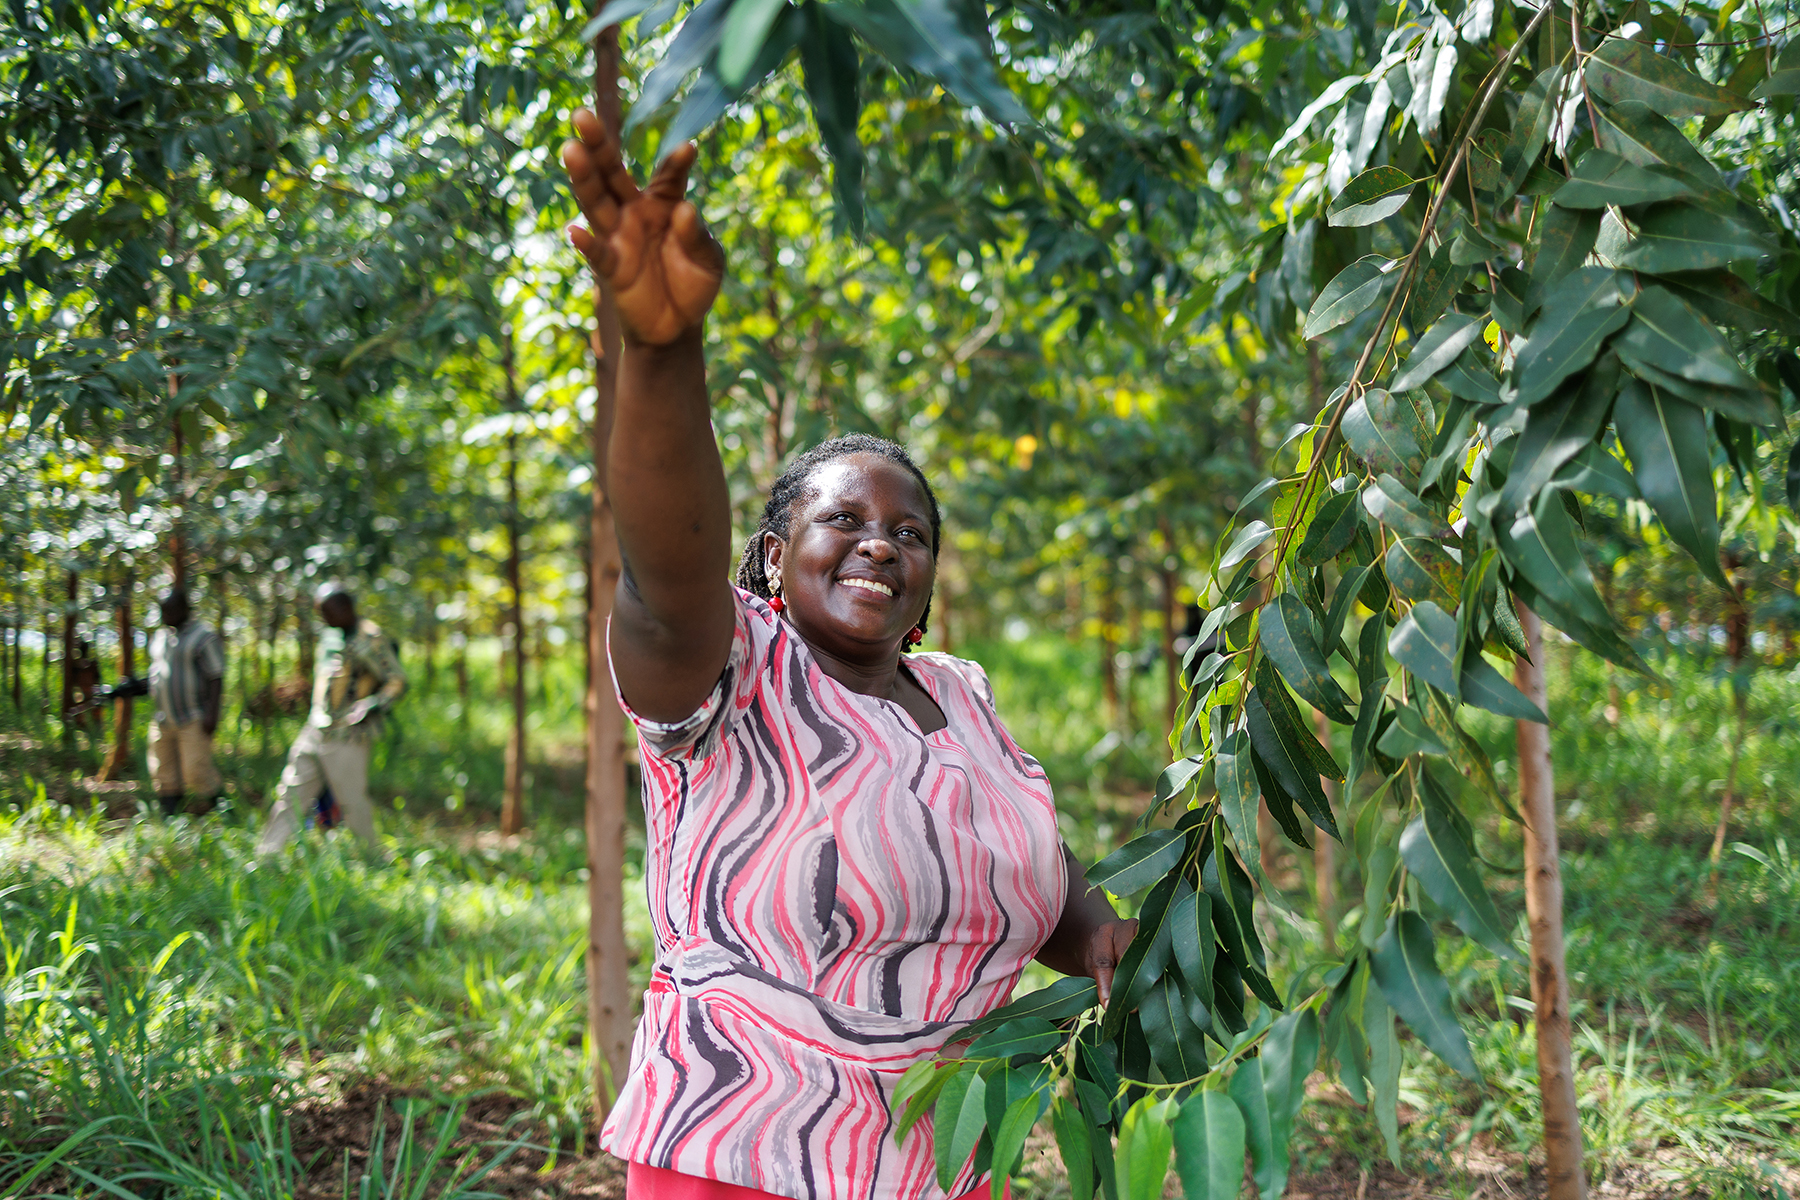 Community member in Uganda reaching for leaves of tree